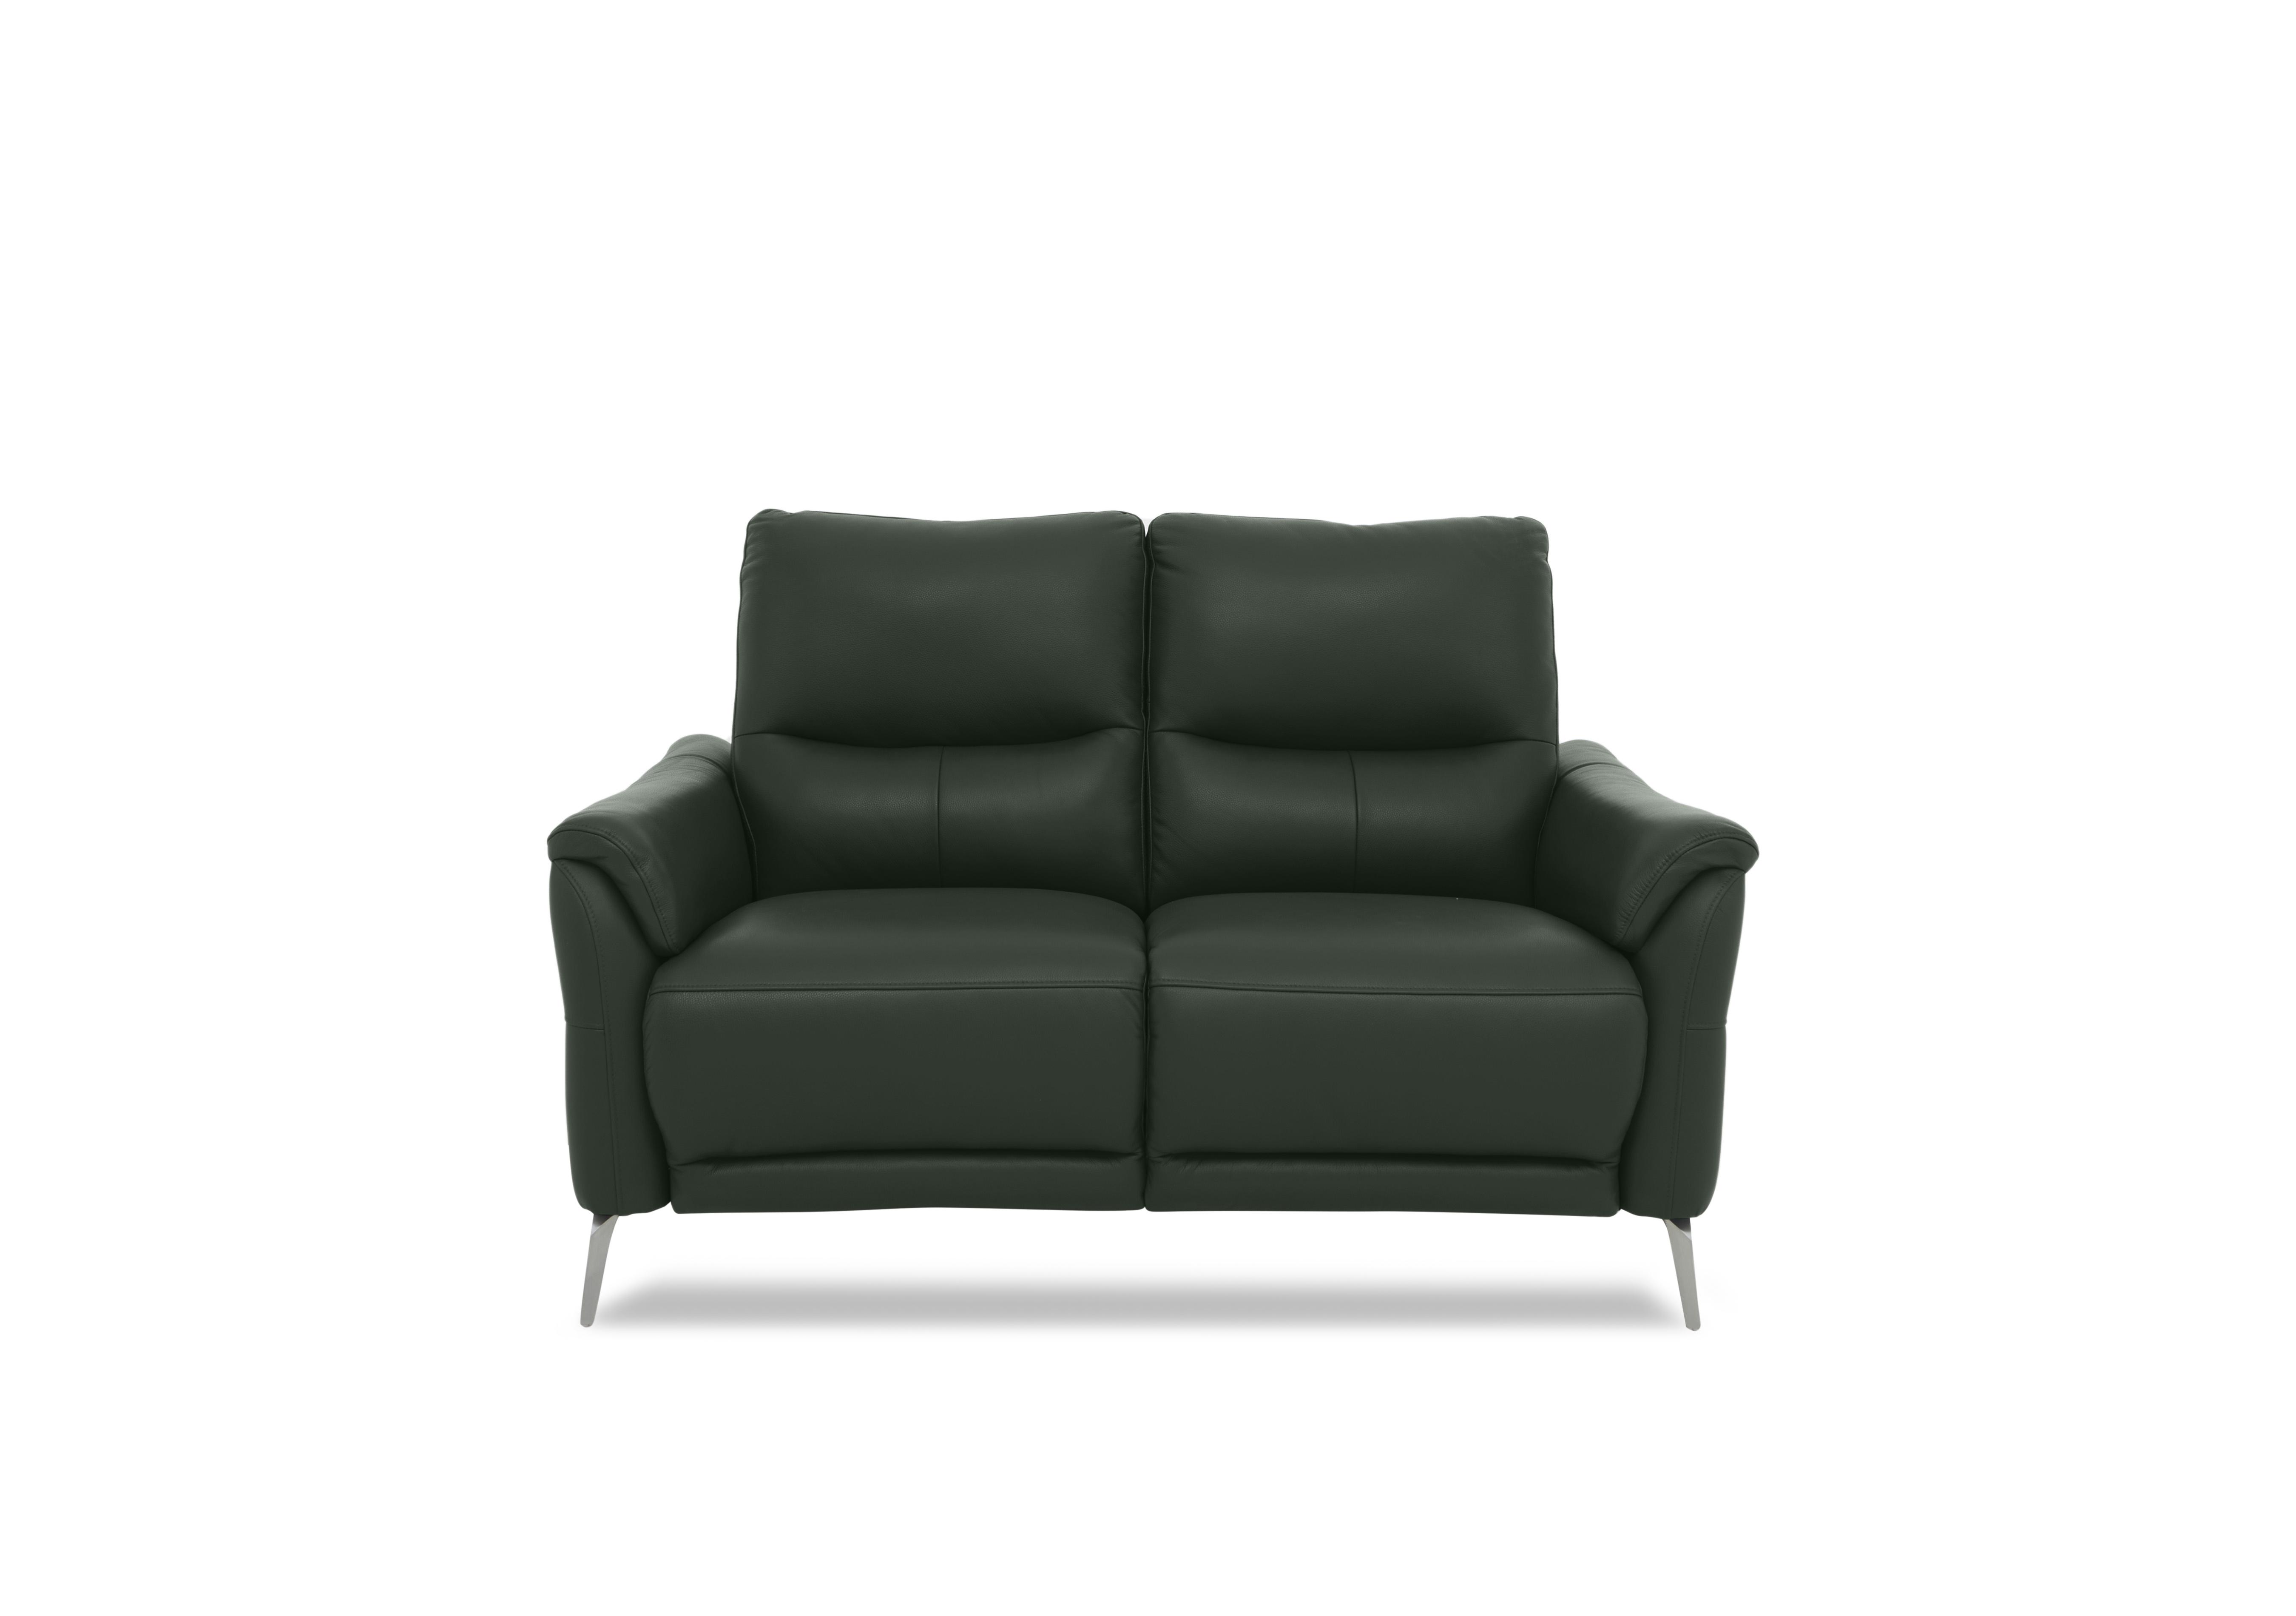 Daytona 2 Seater Leather Sofa in Cat-40/10 Oslo Pine on Furniture Village